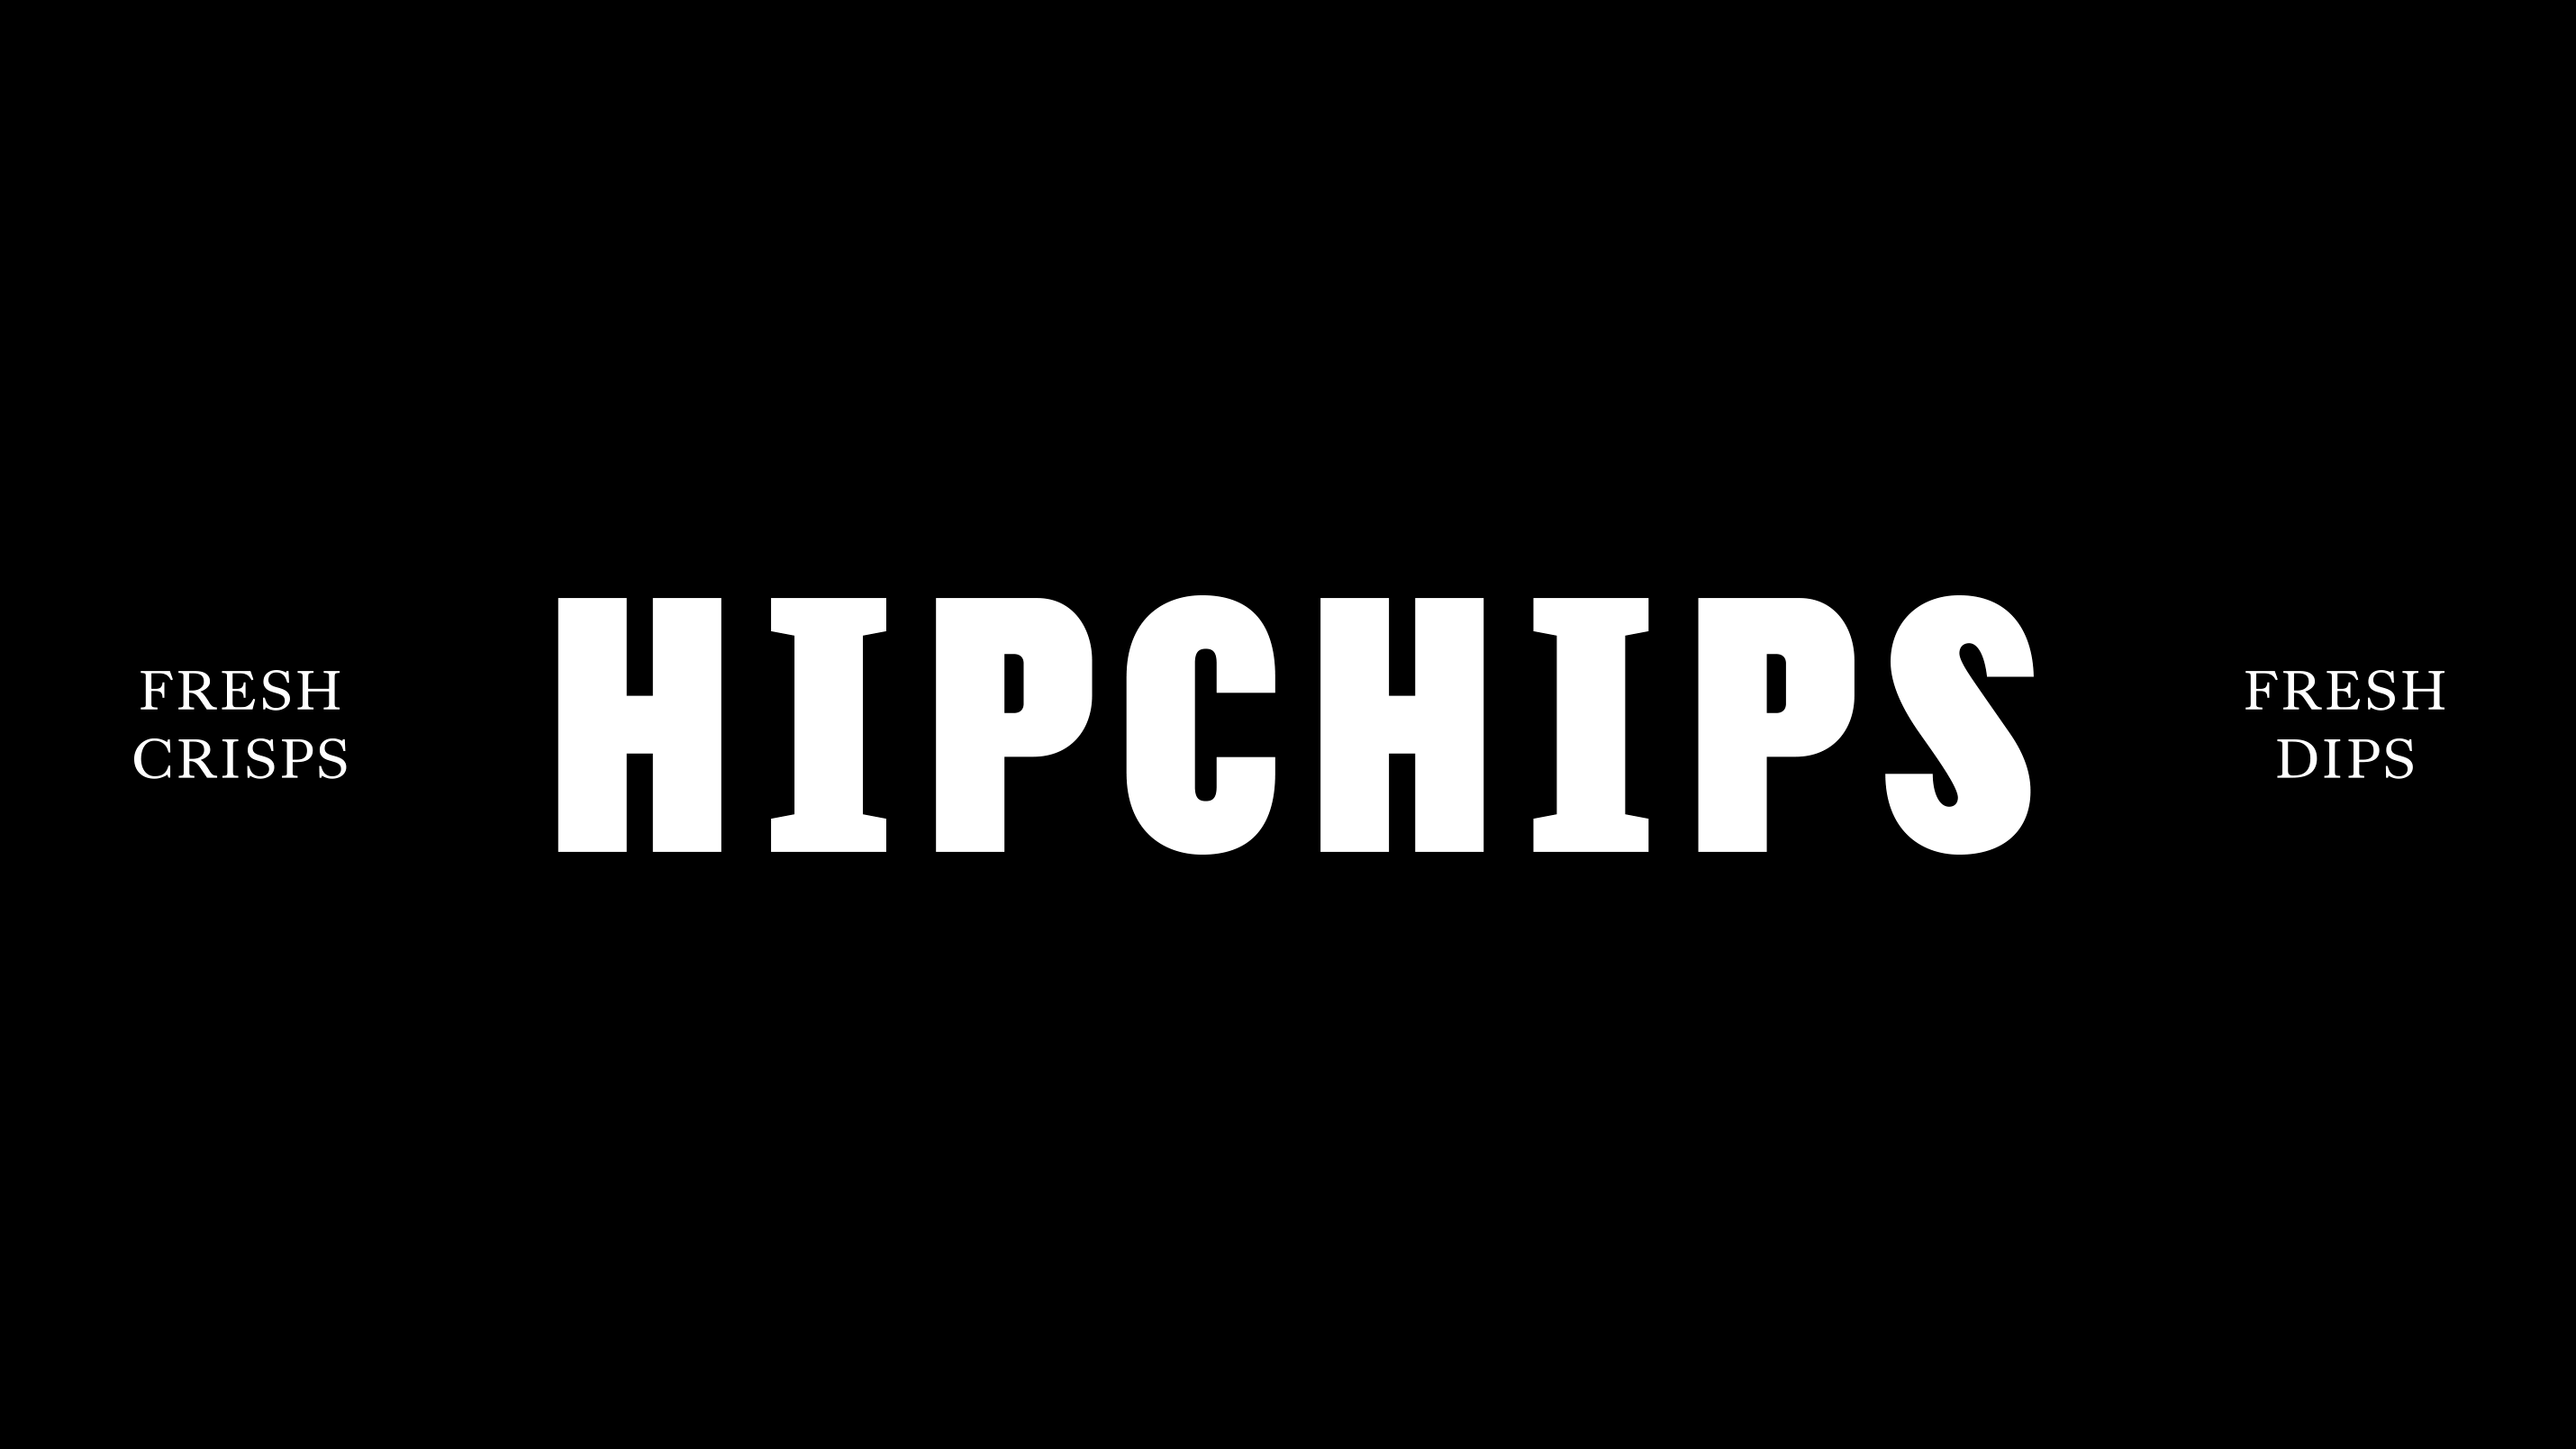 4-hipchips-logo-3